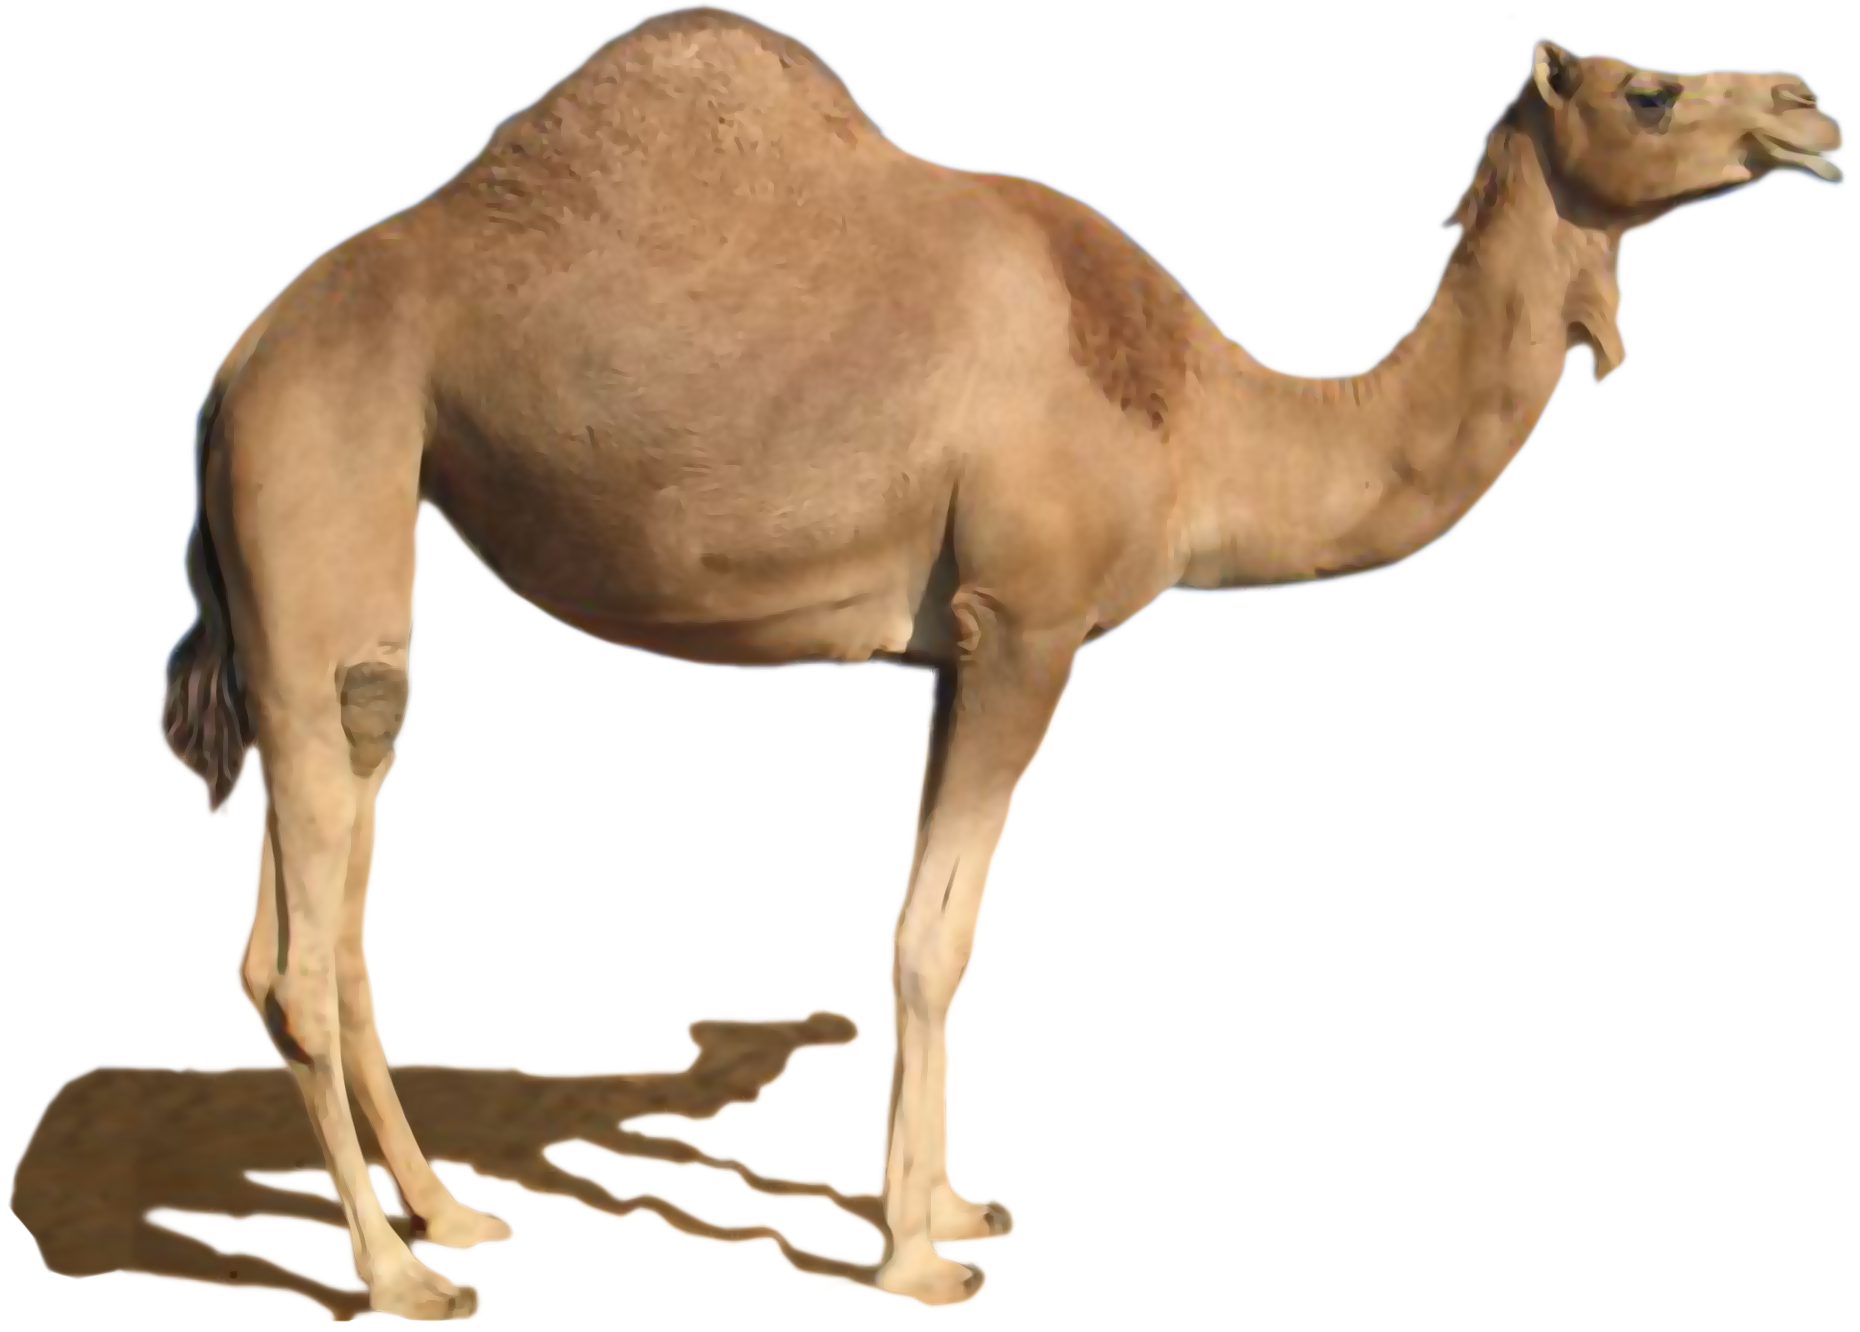 Painted desert camel, Hand Pa